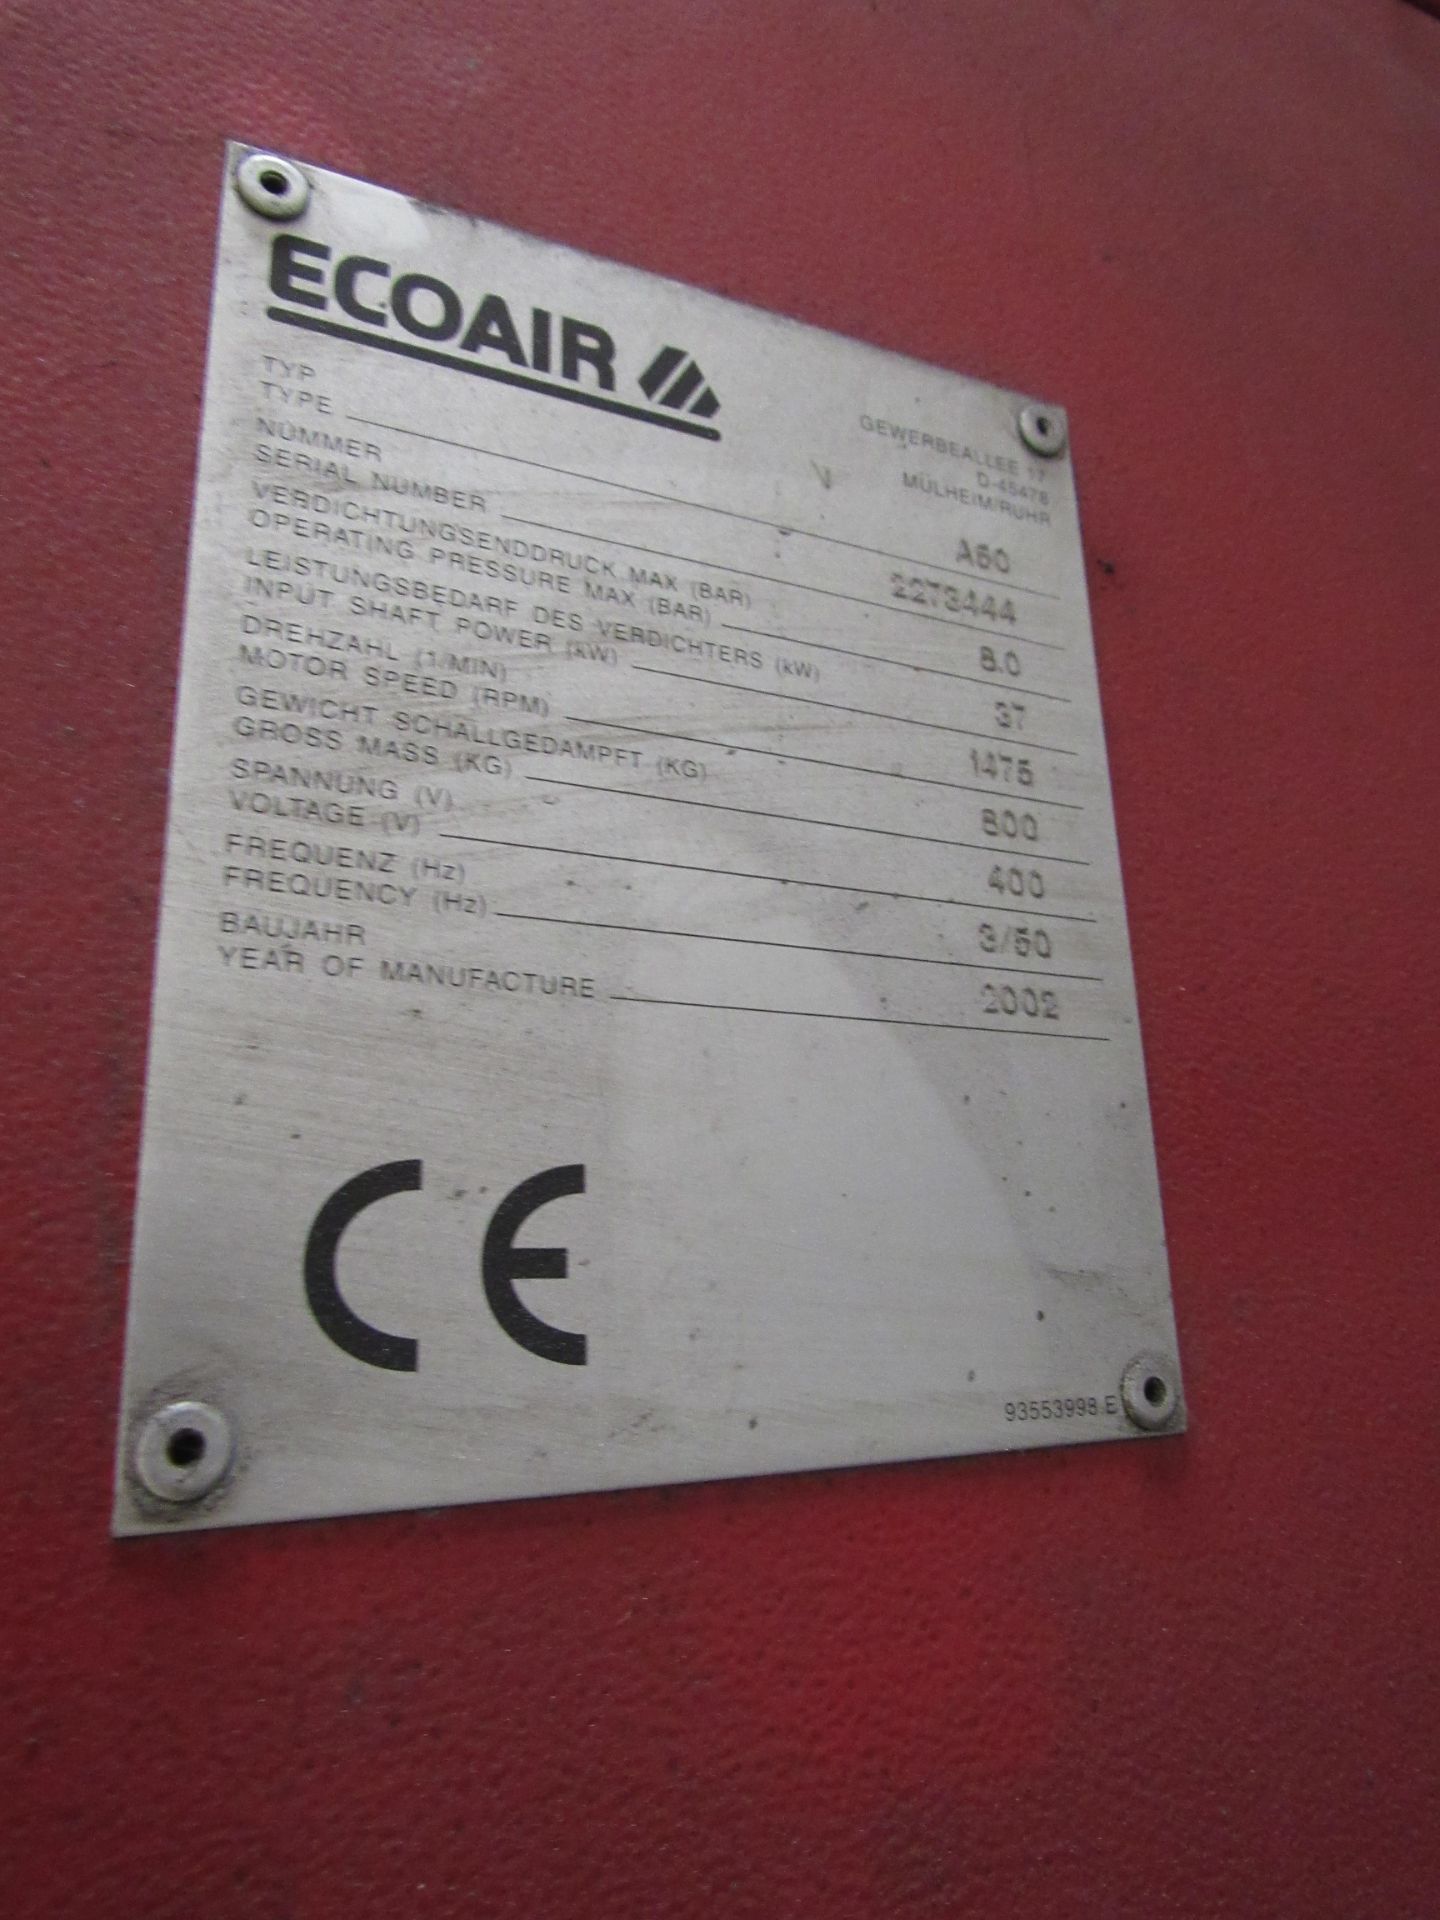 Ecoair Compressor A50 DL18 - Image 3 of 4